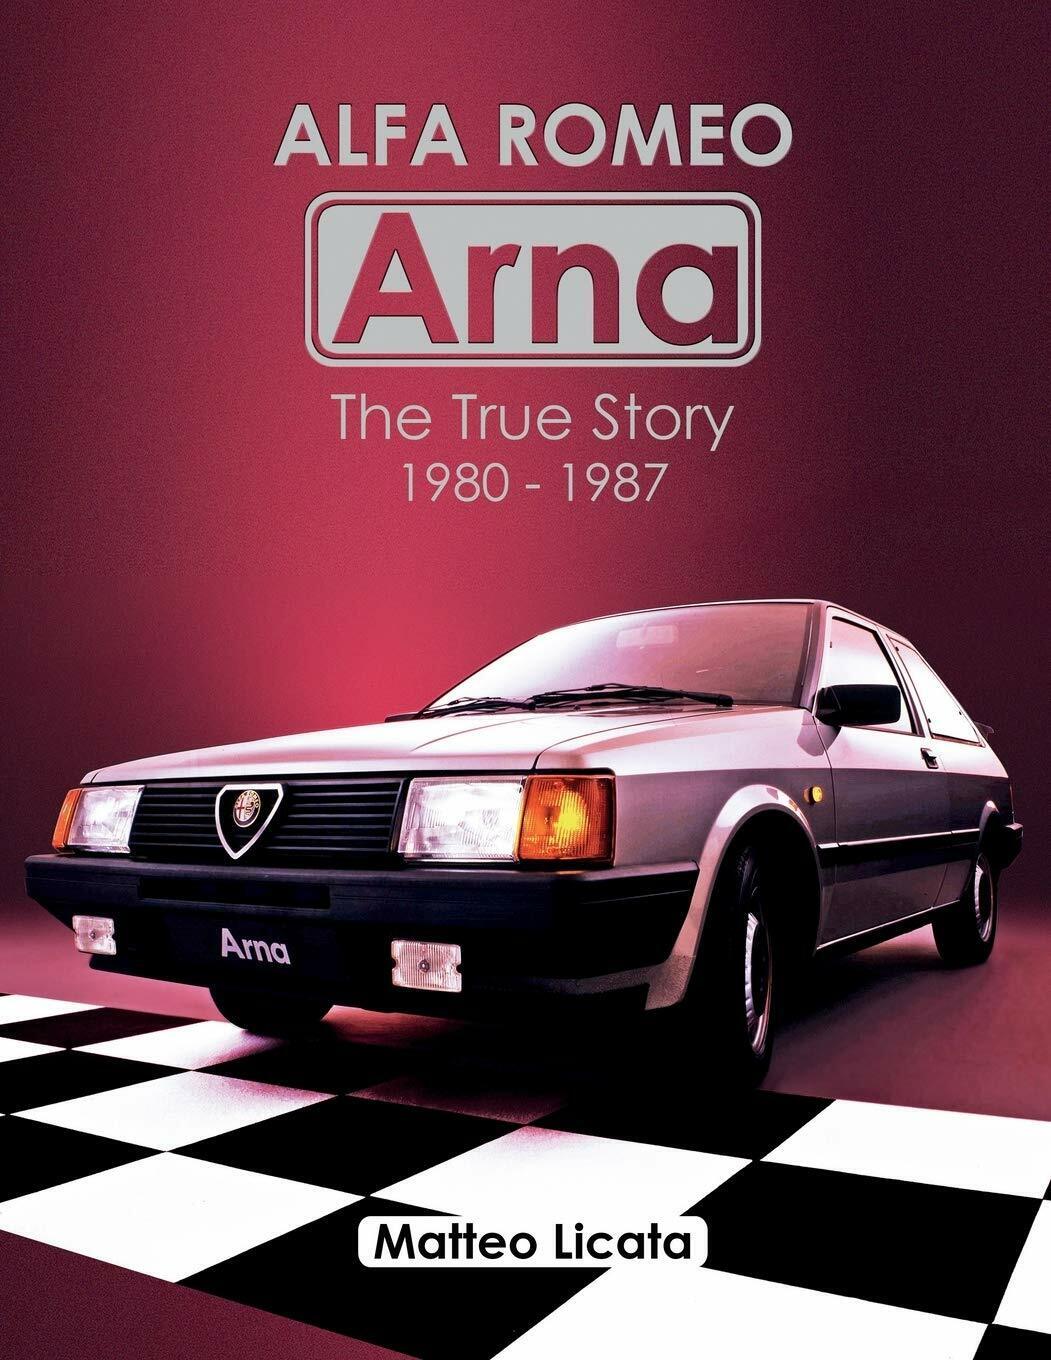 Alfa Romeo Arna The True Story 1980-1987 di Matteo Licata,  2020,  Indipendently